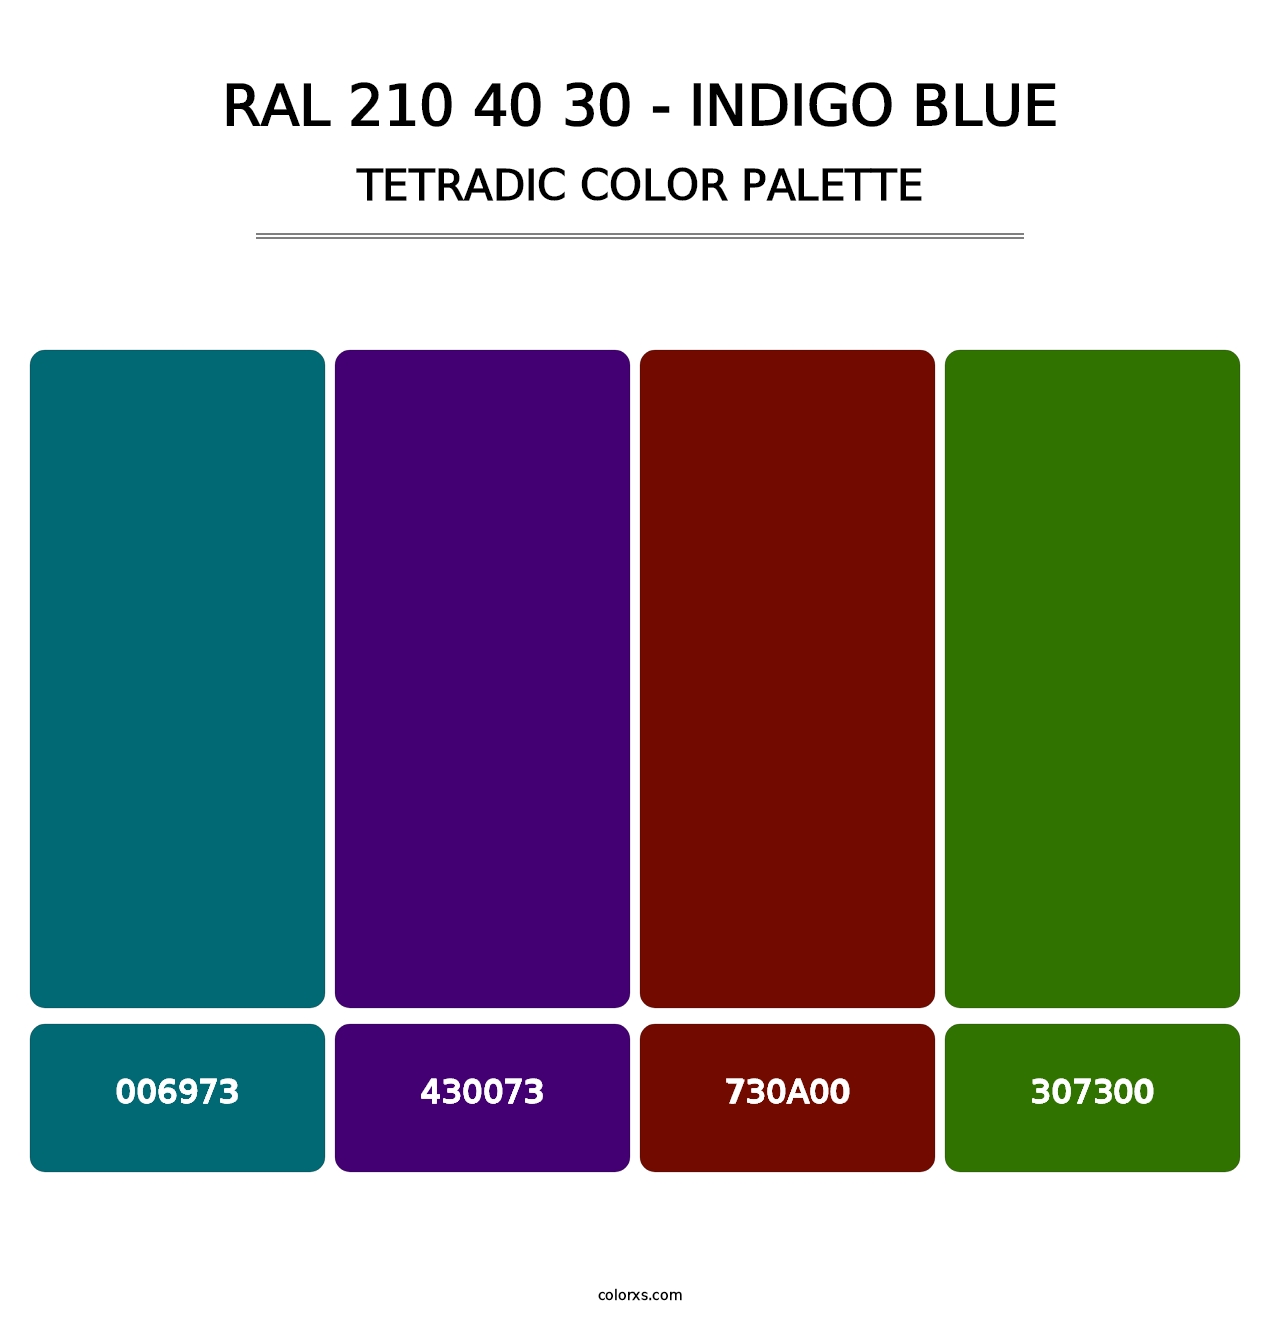 RAL 210 40 30 - Indigo Blue - Tetradic Color Palette